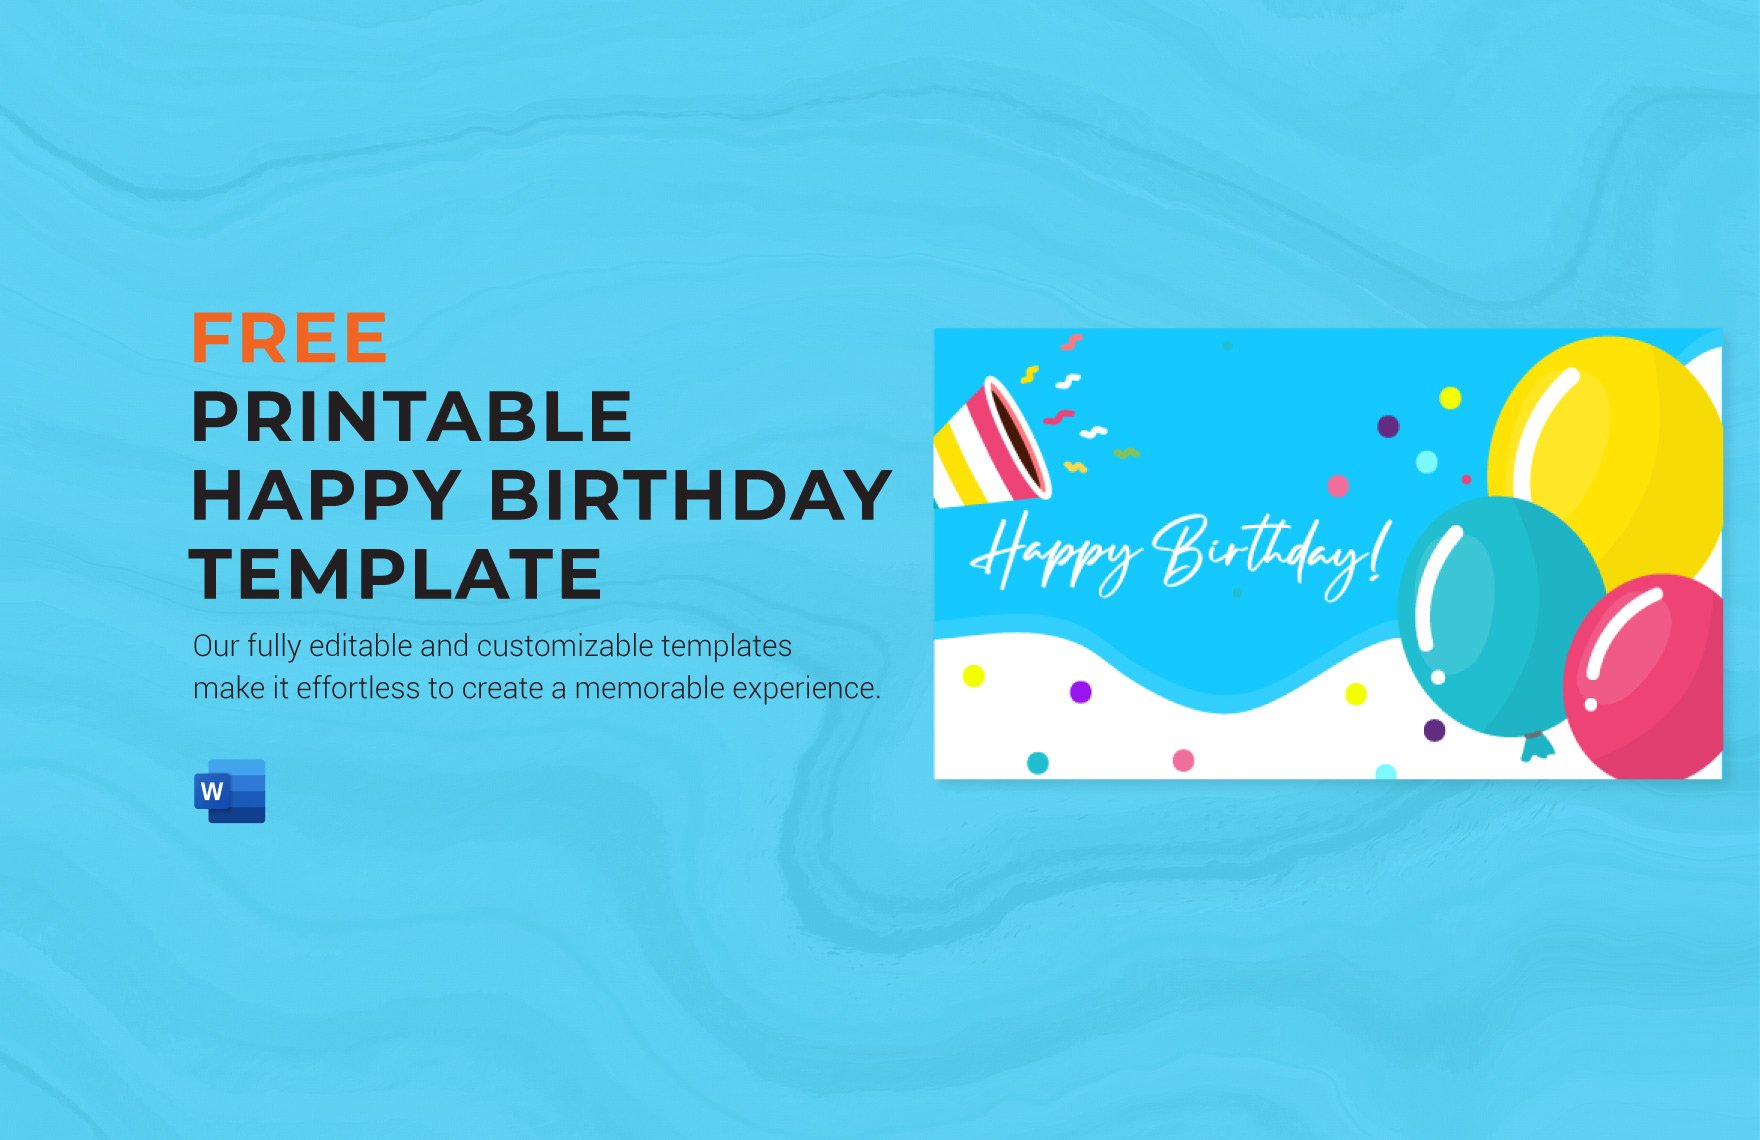 Free Printable Happy Birthday Template in Word, Google Docs